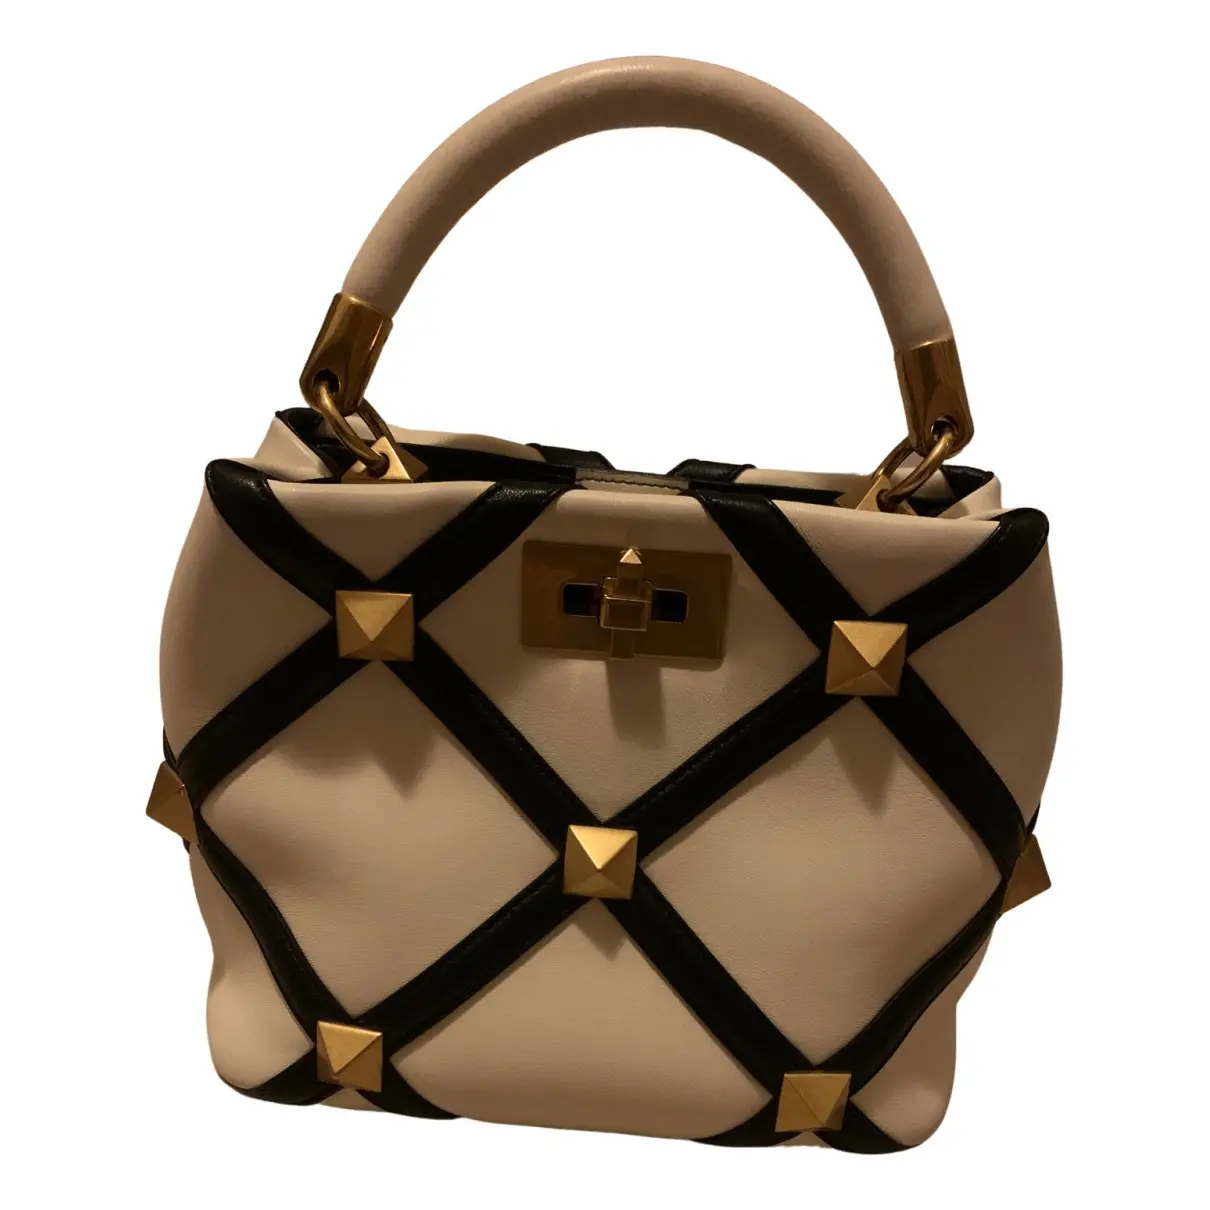 Roman Stud leather handbag Valentino Garavani